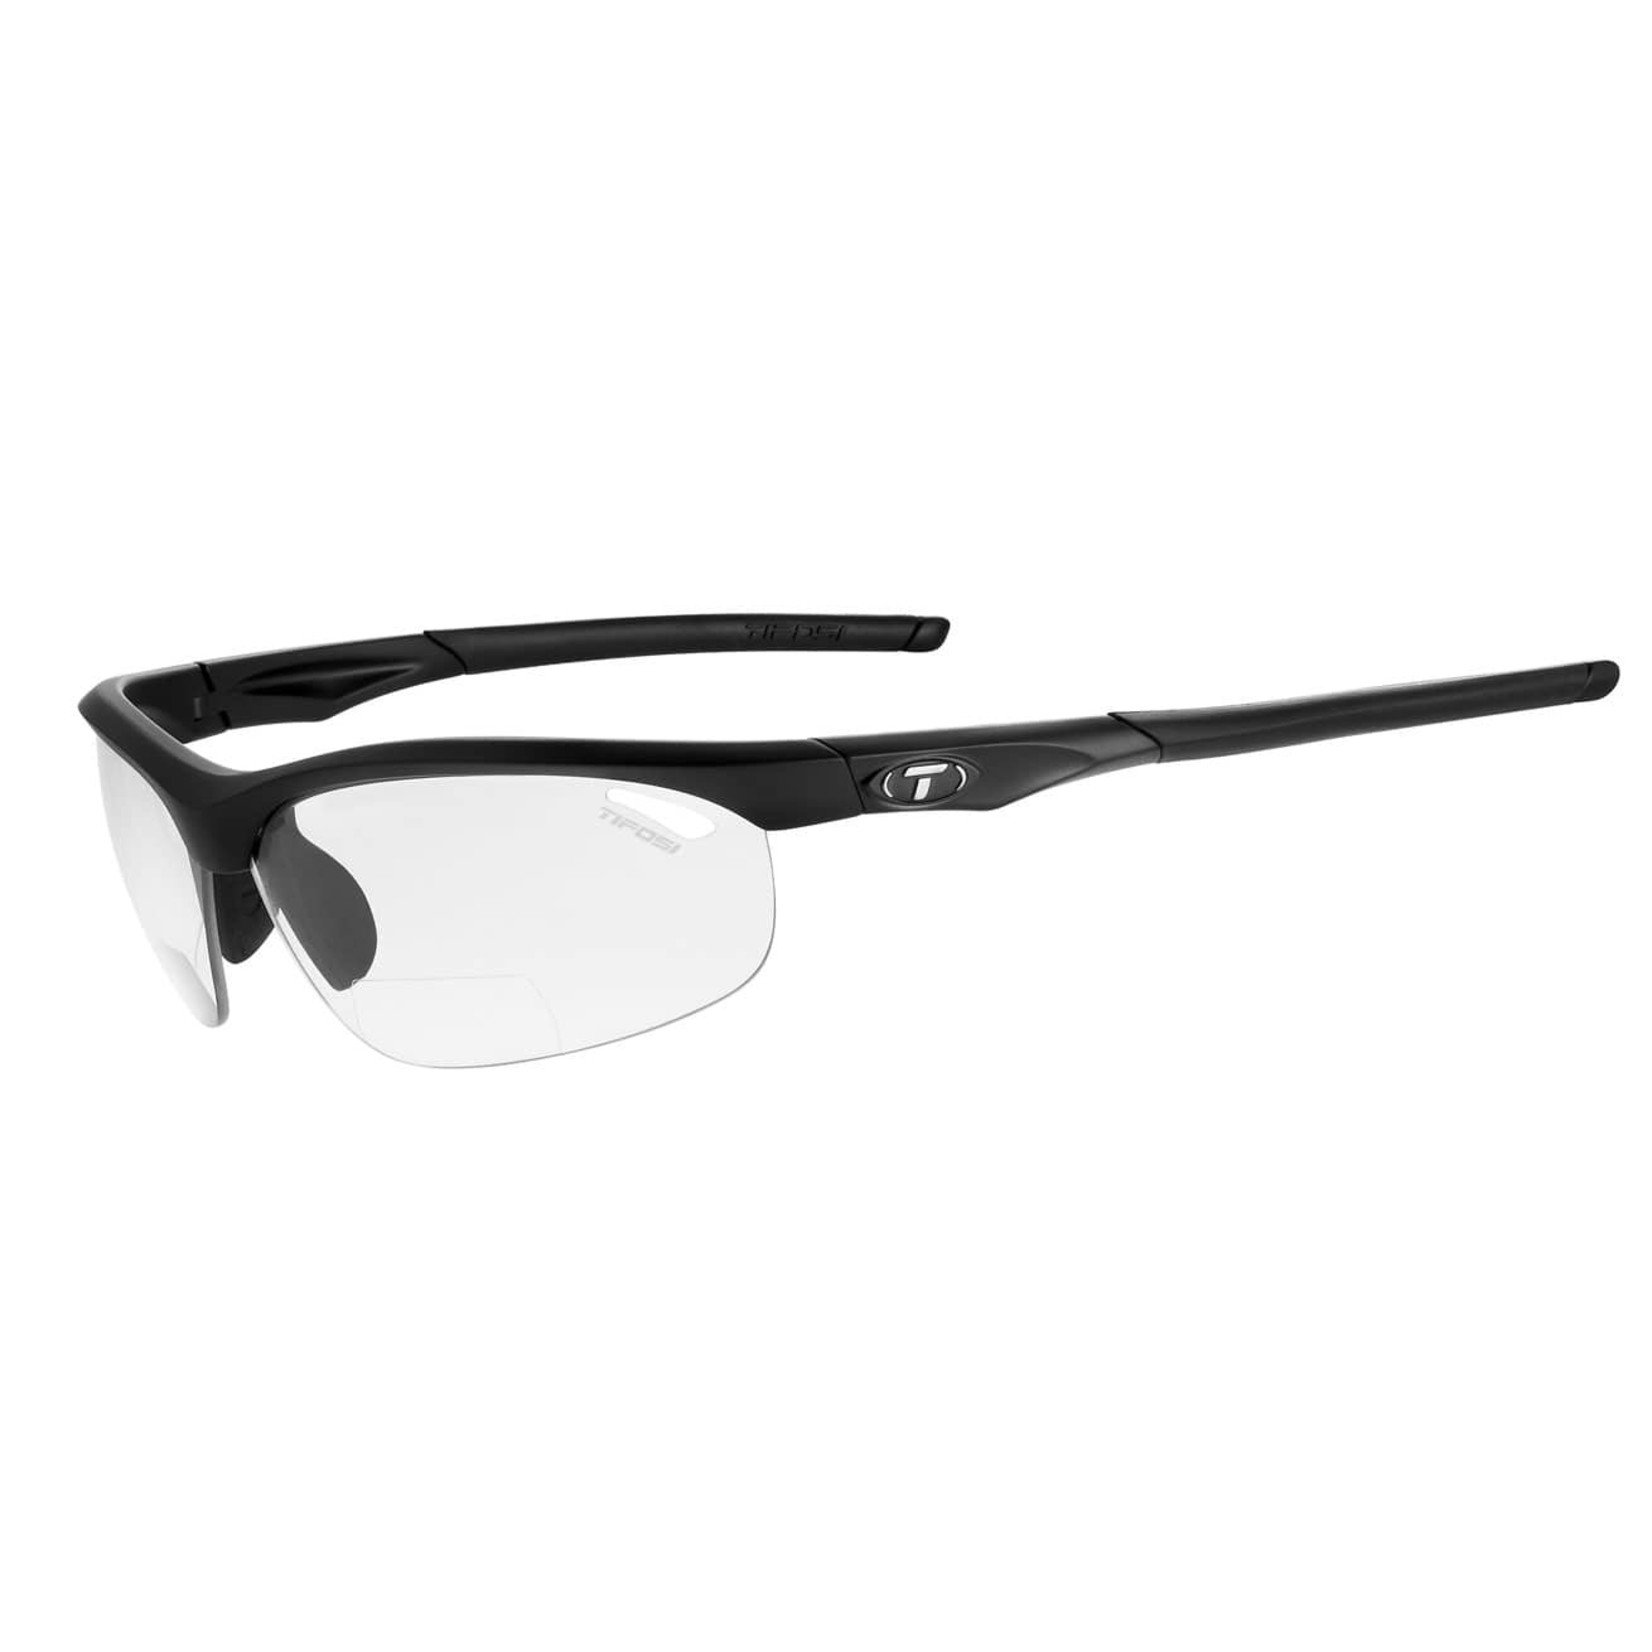 TIFOSI OPTICS Veloce, Matte Black Foto +1.5 Reader Lens Sunglasses